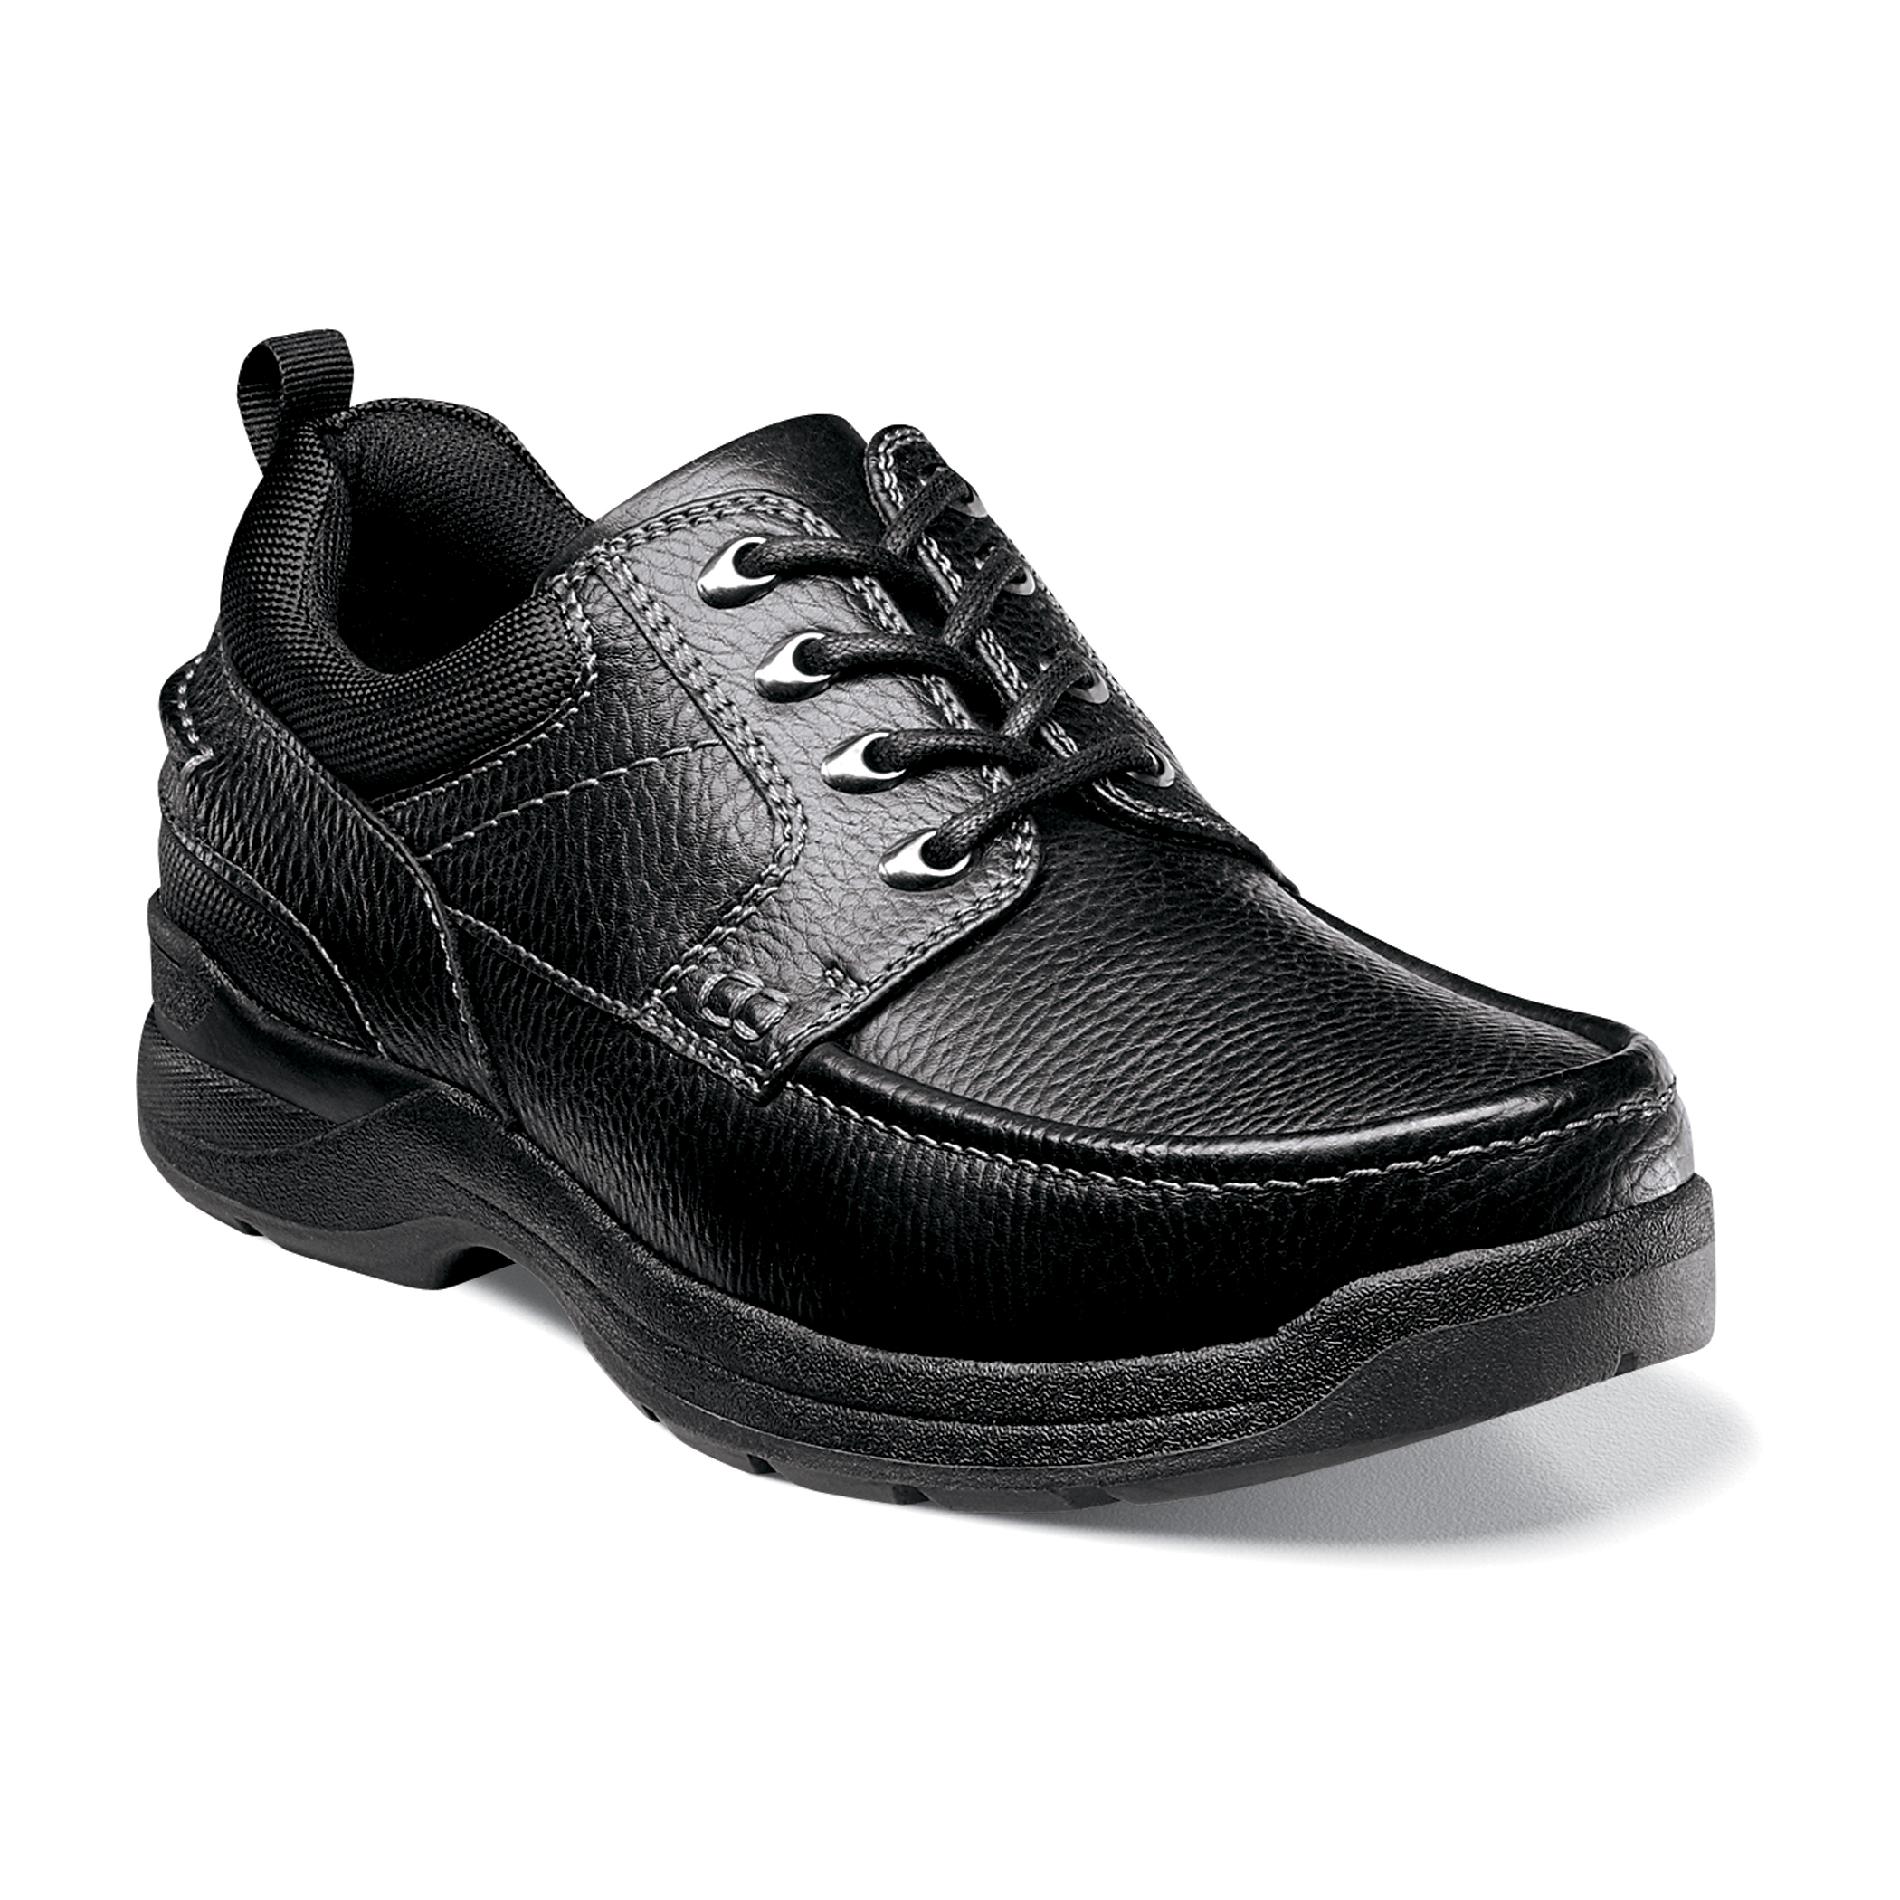 Nunn Bush Men's Casual Shoe Copeland Wide Avail - Black